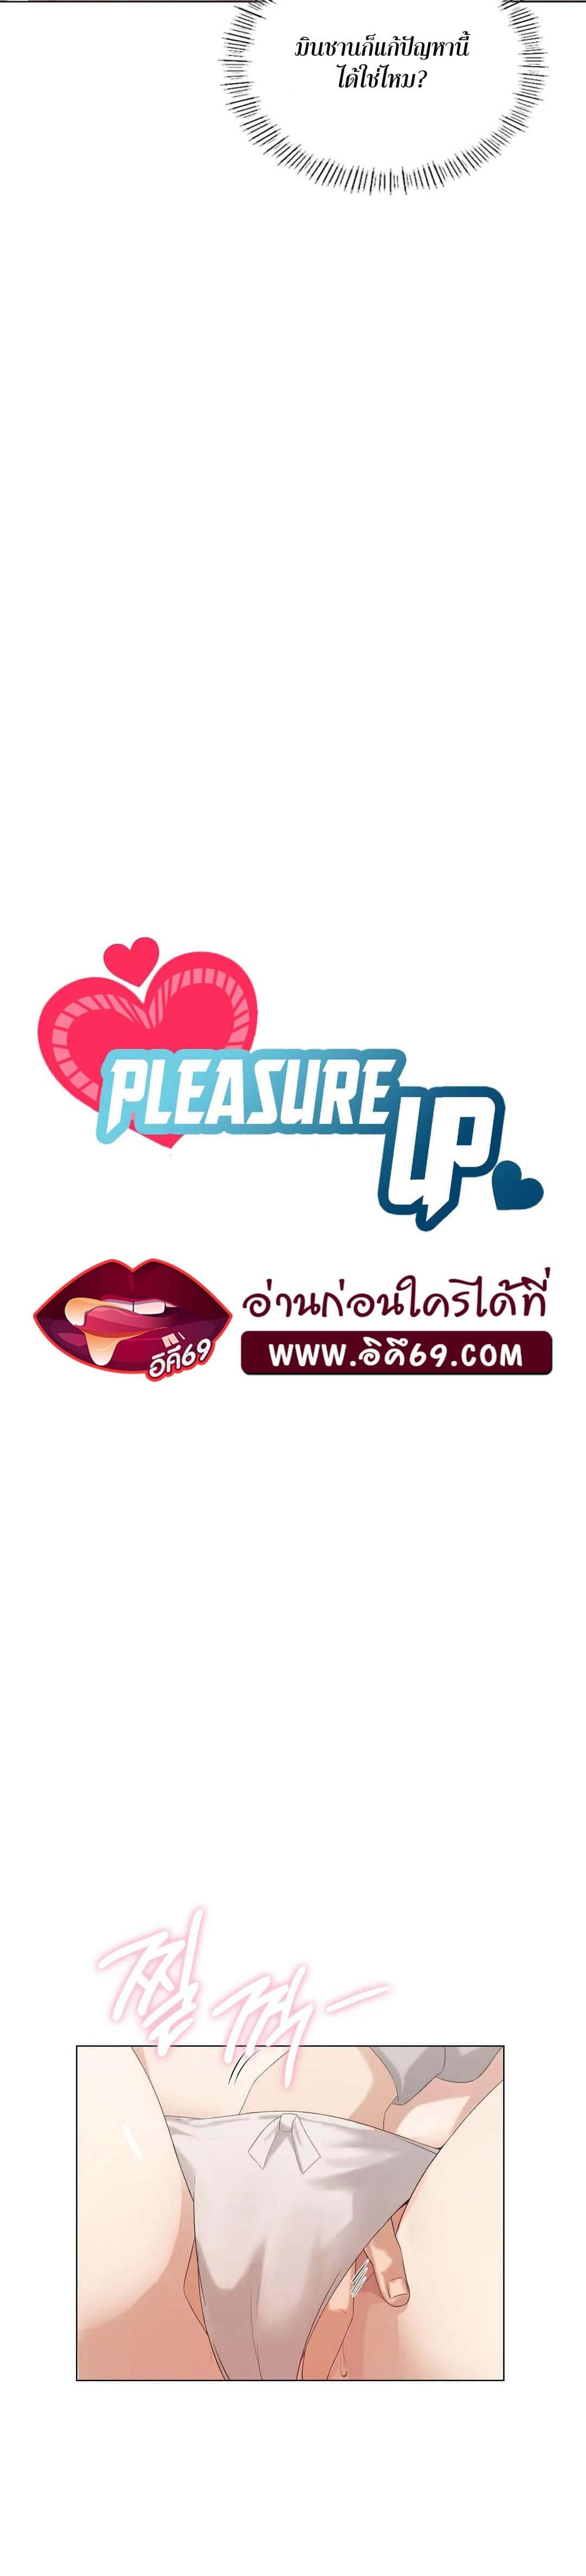 Pleasure up! 5 10